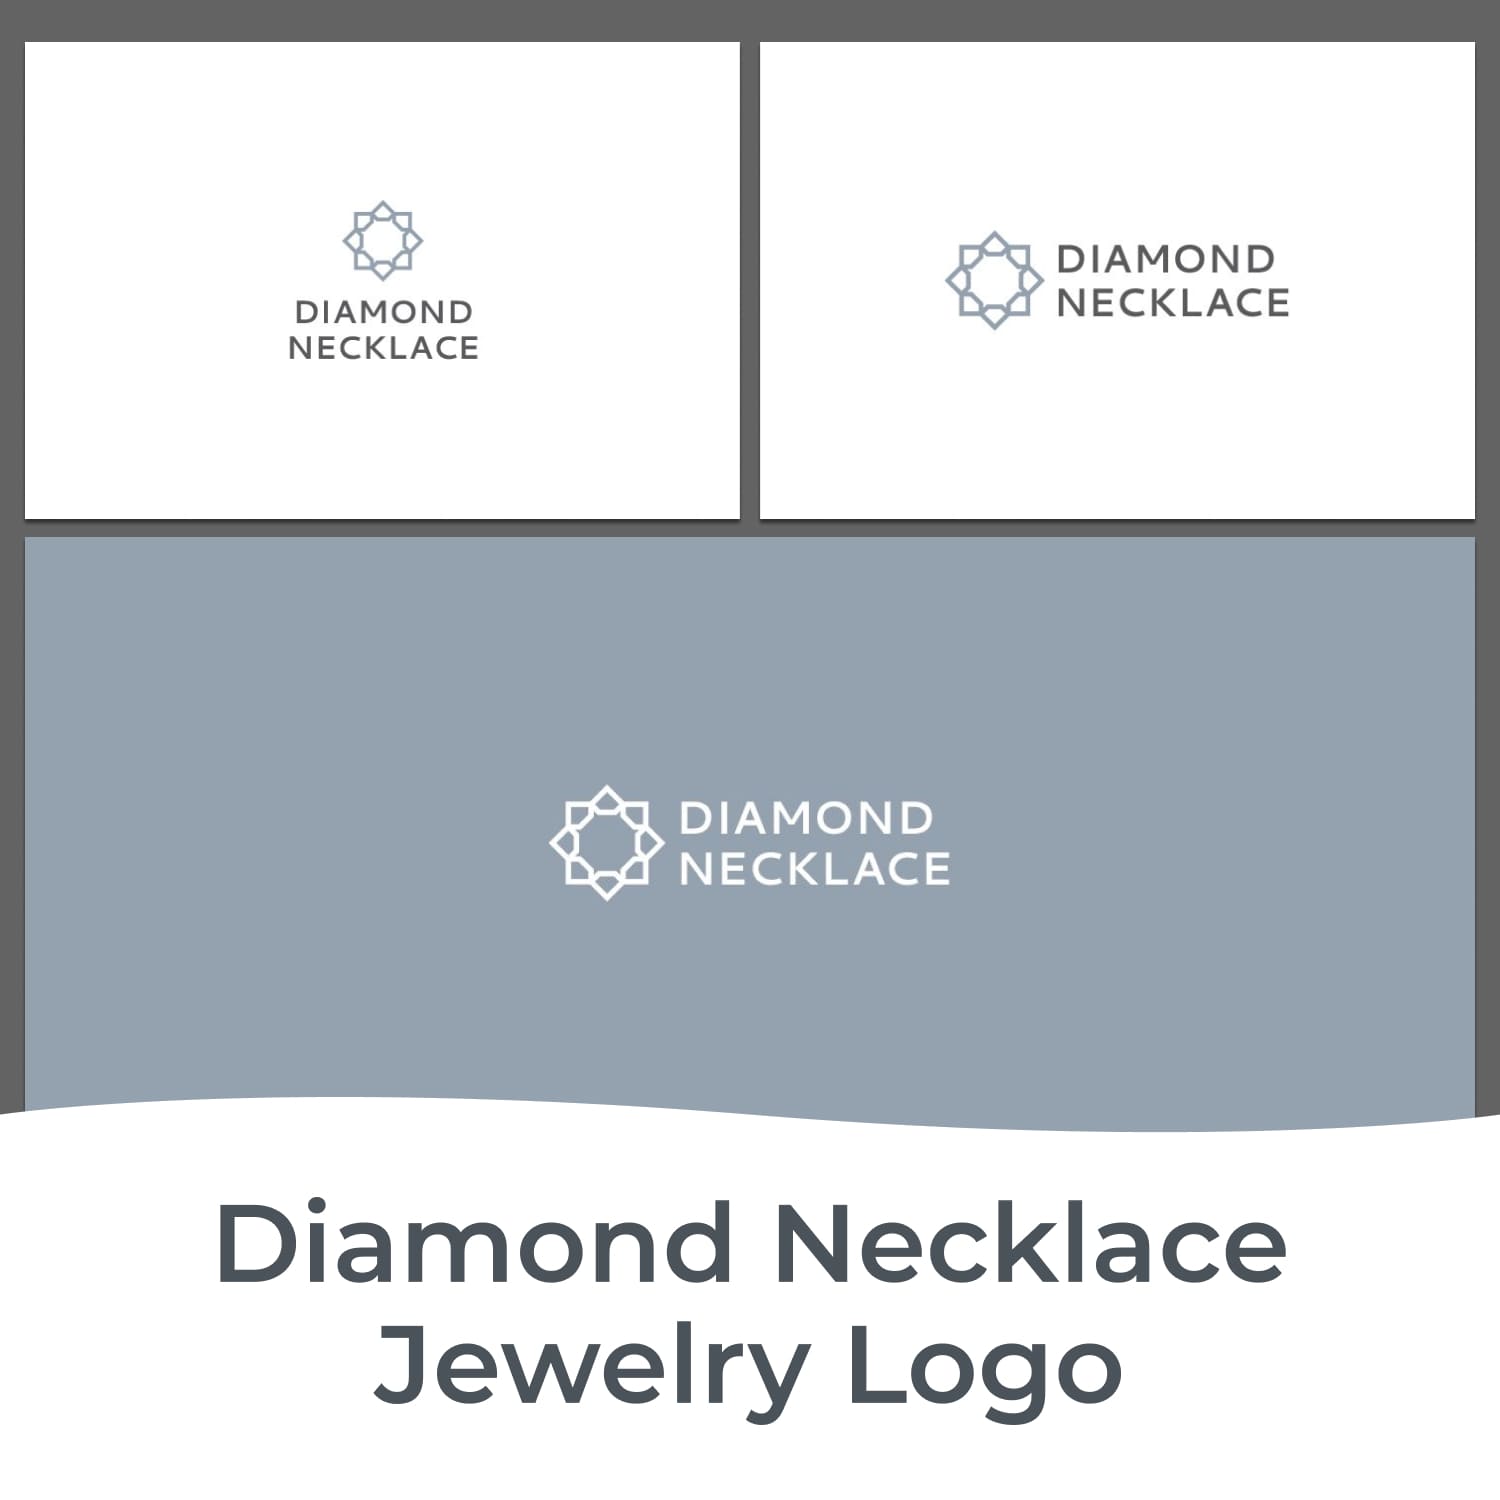 Diamond Necklace Jewelry Logo Template cover image.